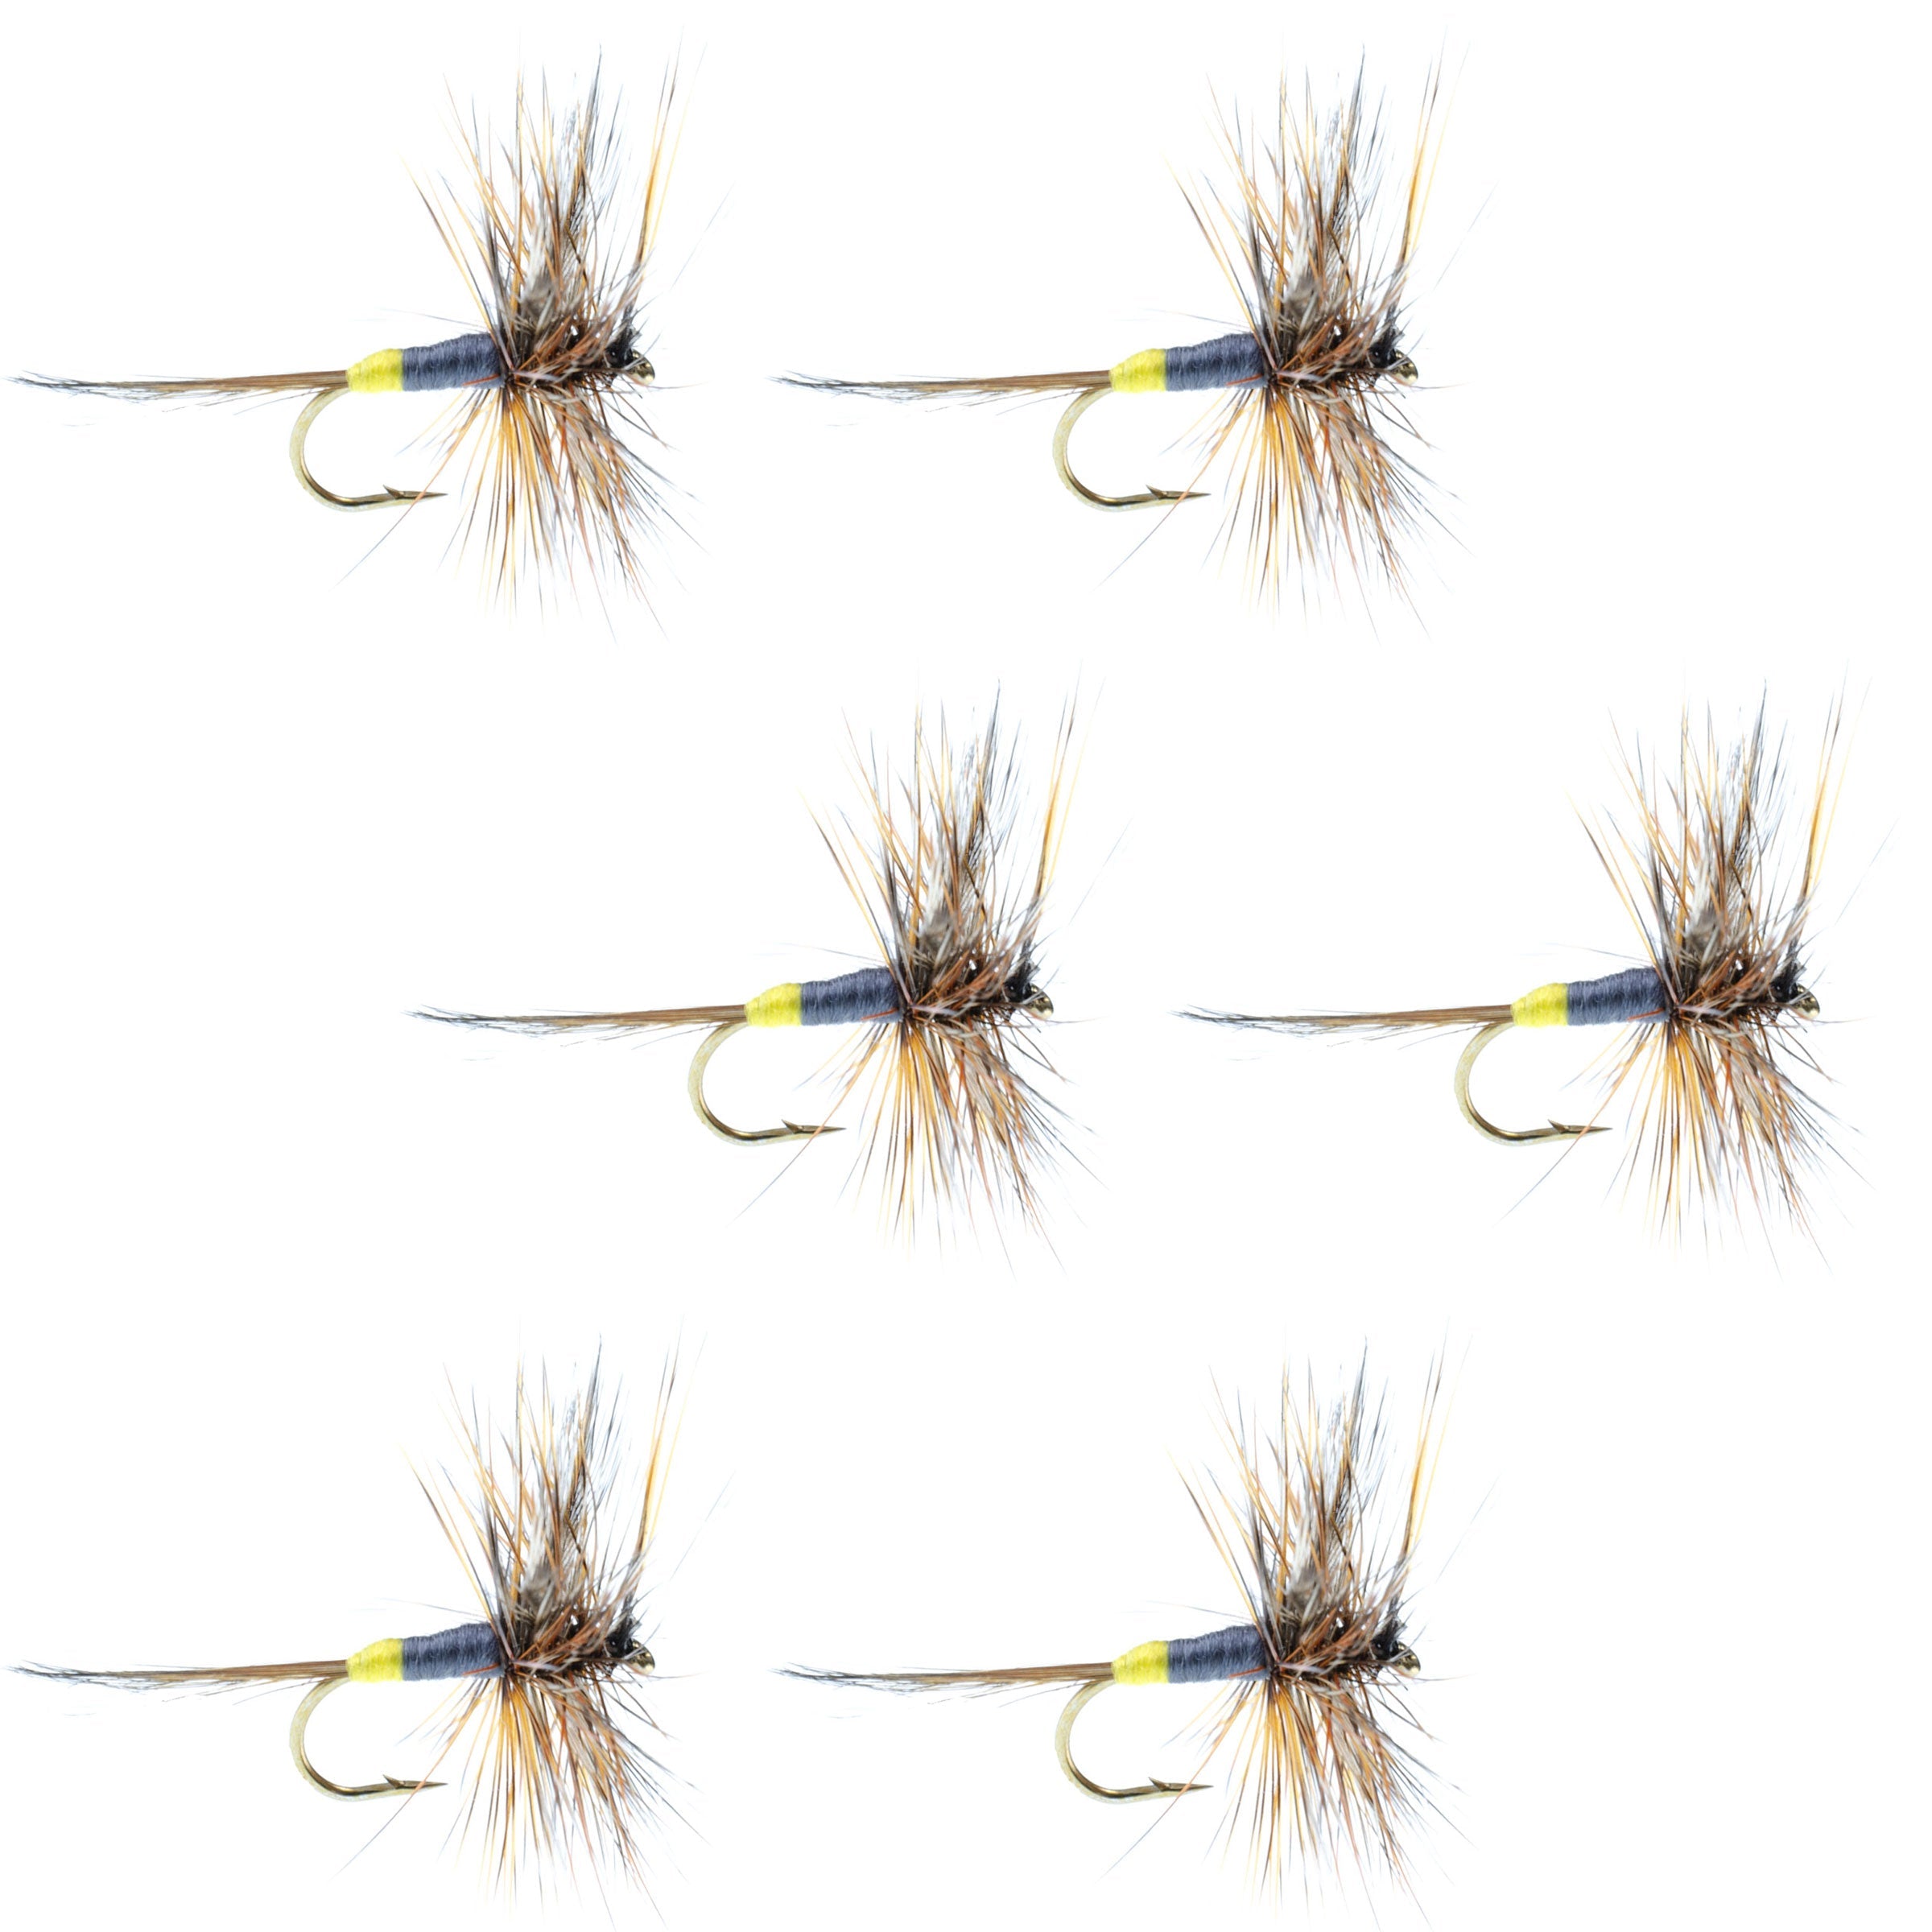 Adams Female Classic Dry Fly - 6 Flies - Hook Size 14